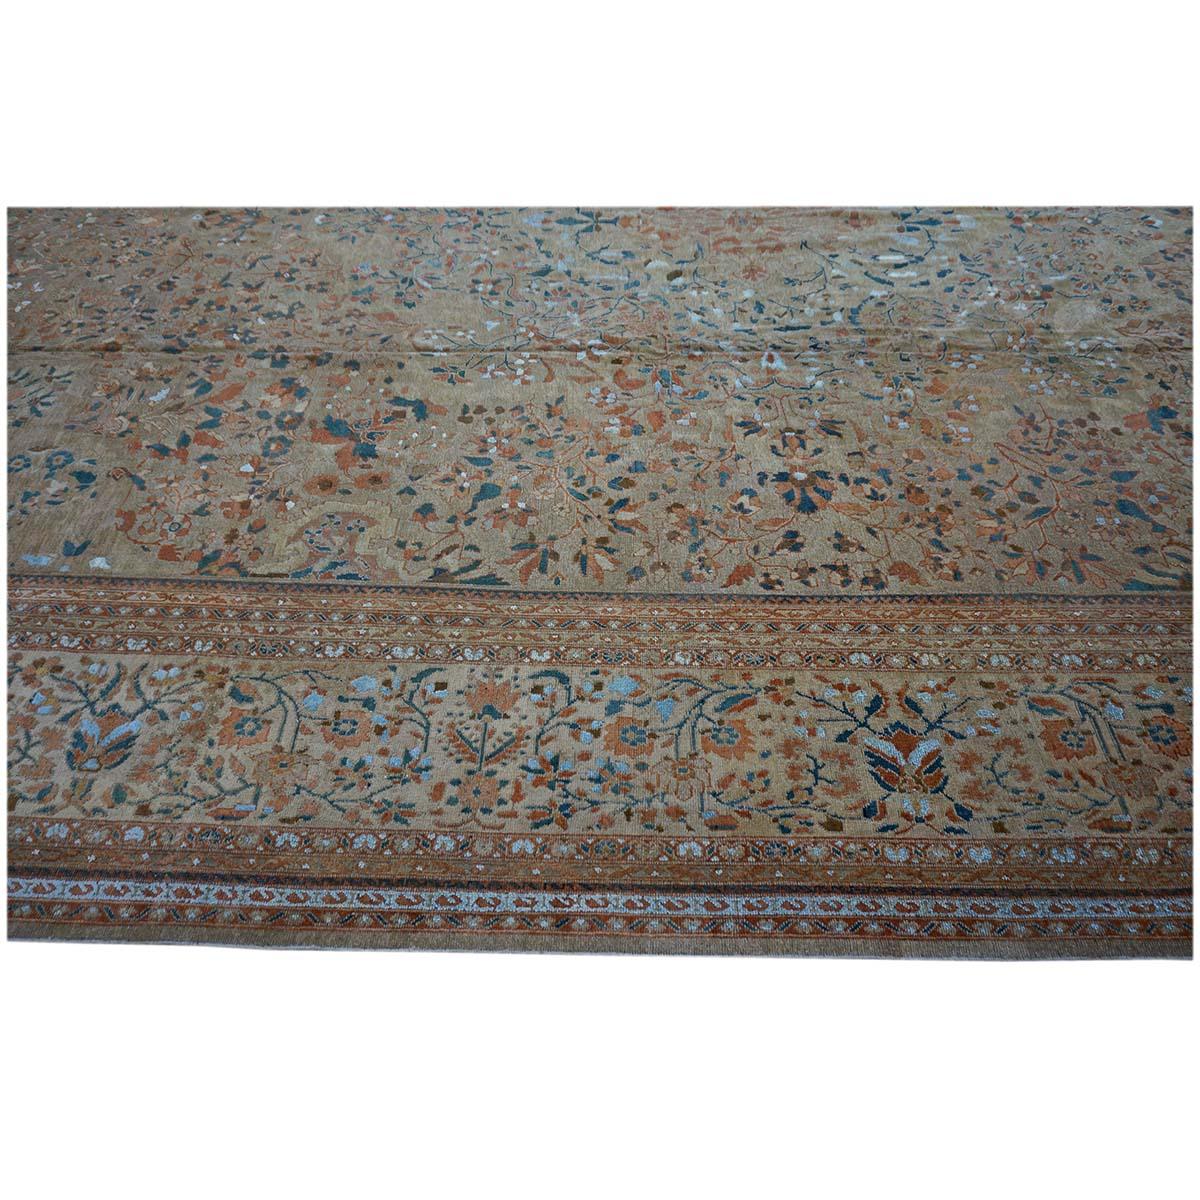 1870s Antique Persian Ziegler Sultanabad 15x21 Tan, Rust, & Light Blue Area Rug For Sale 4